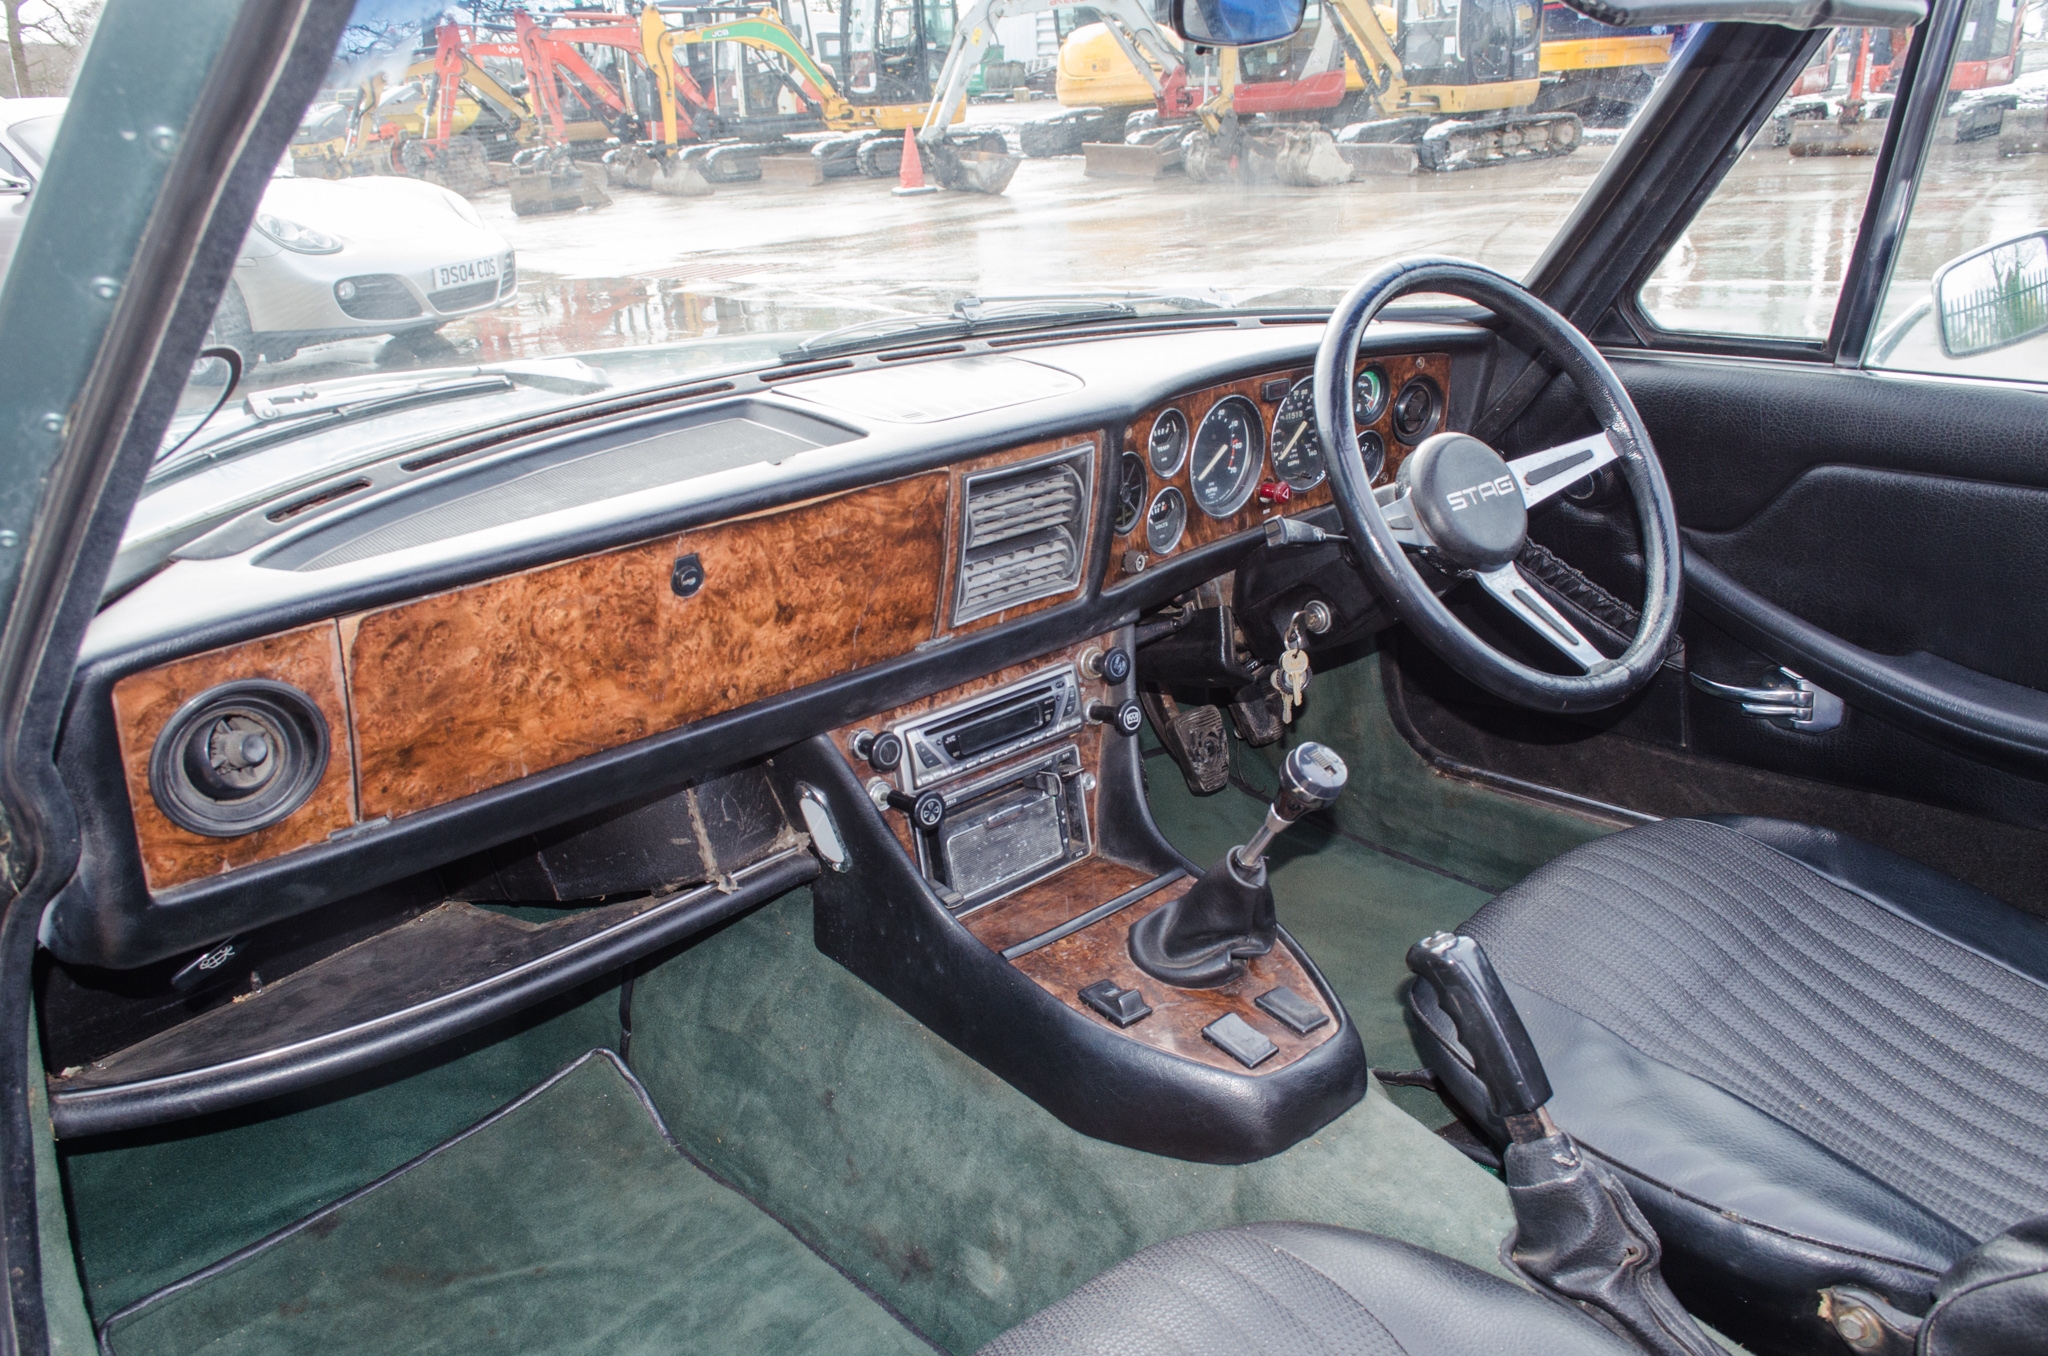 1975 Triumph Stag 2997cc V8 2 door convertible - Image 39 of 59